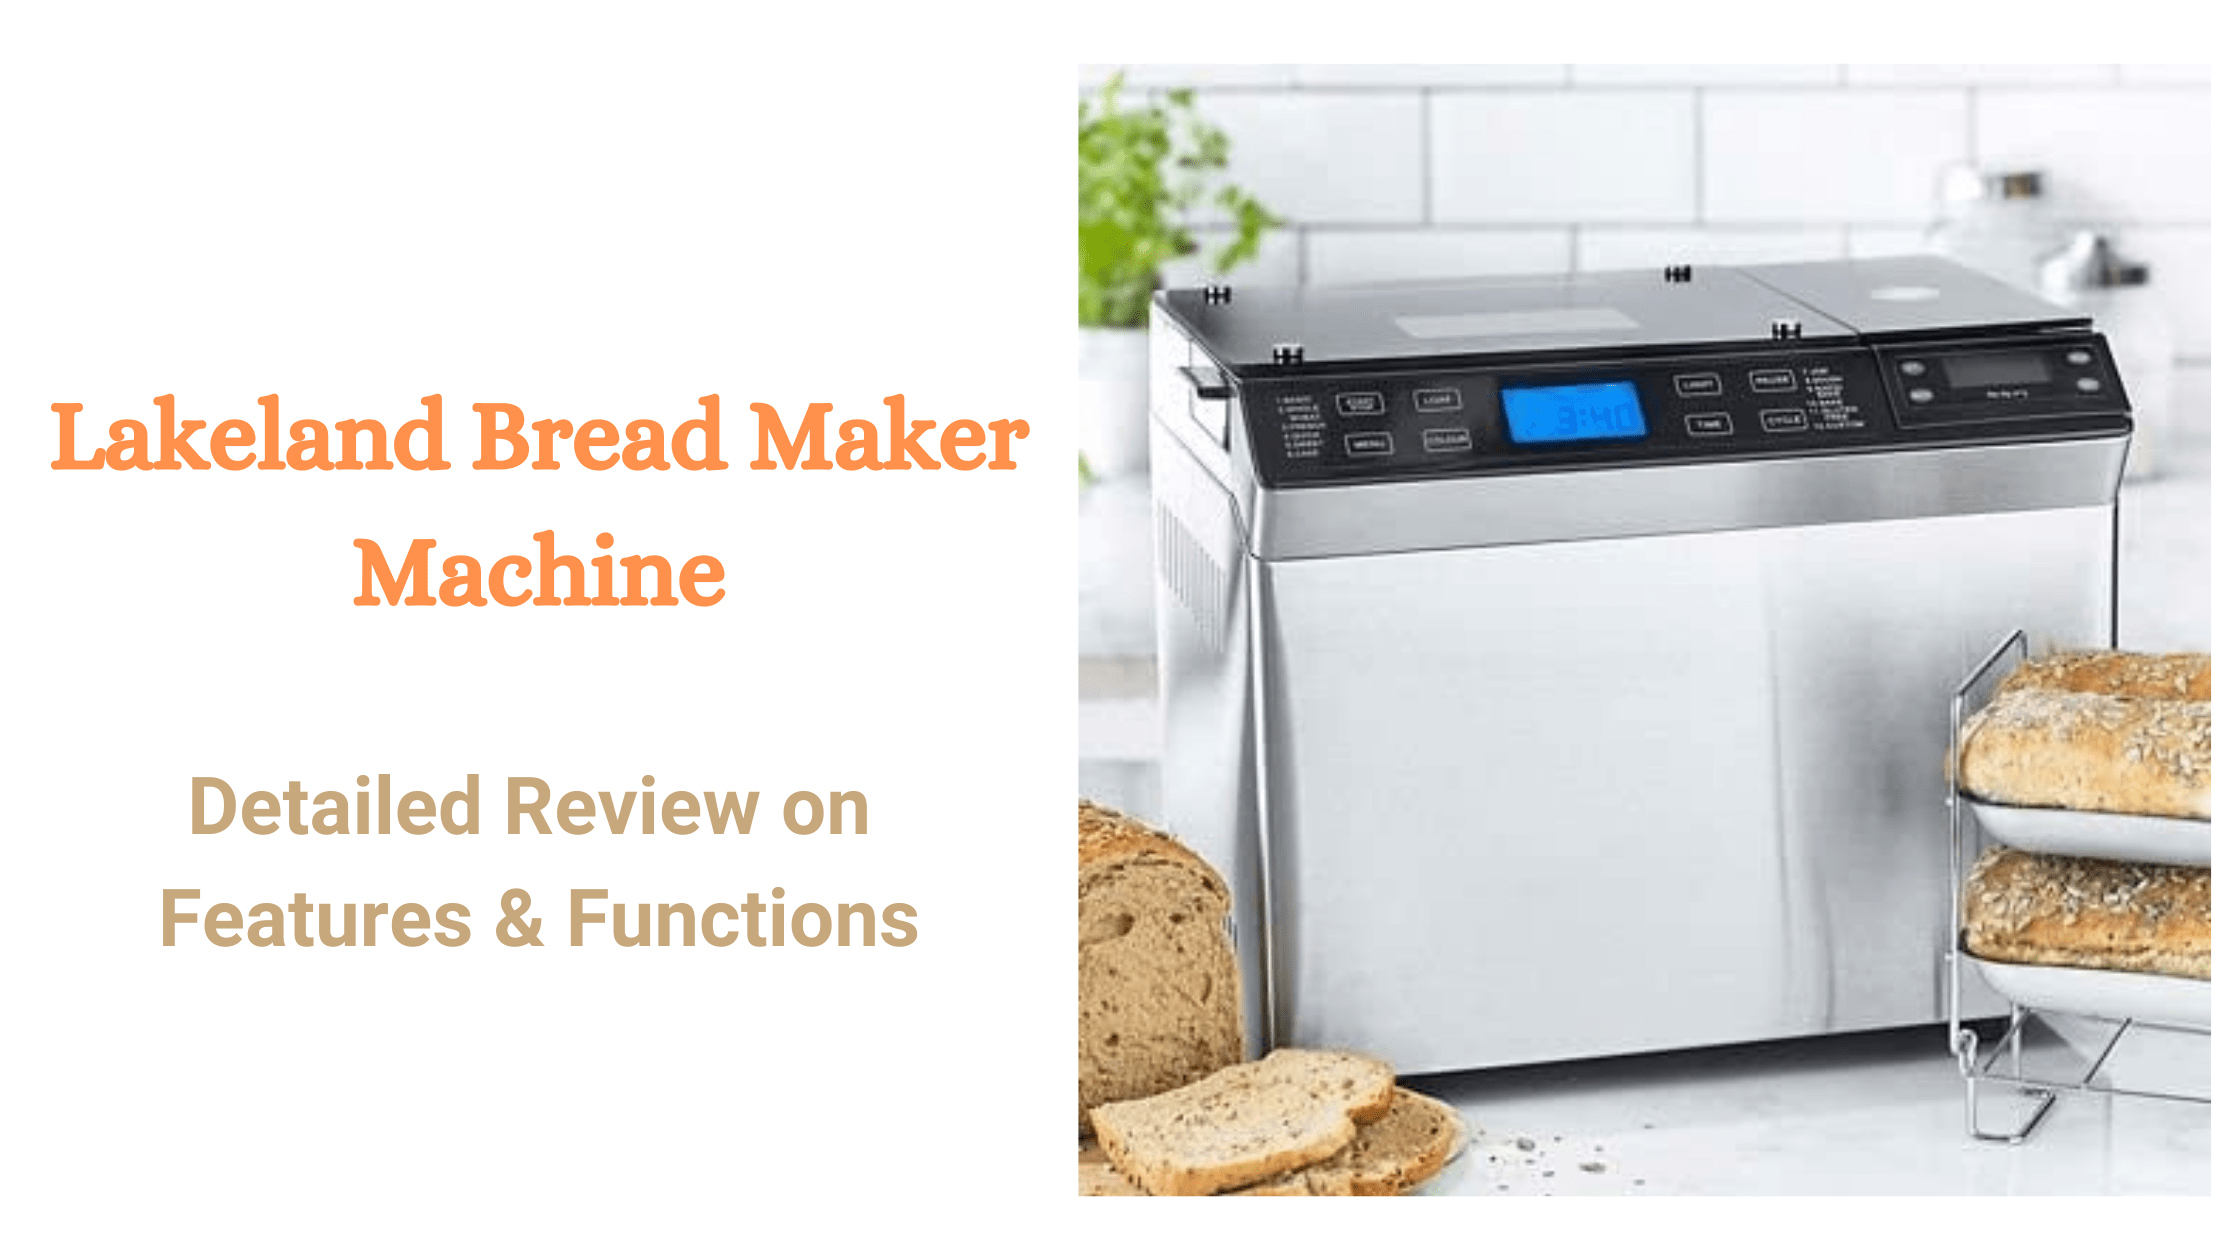 Lakeland Bread Maker Machine Review